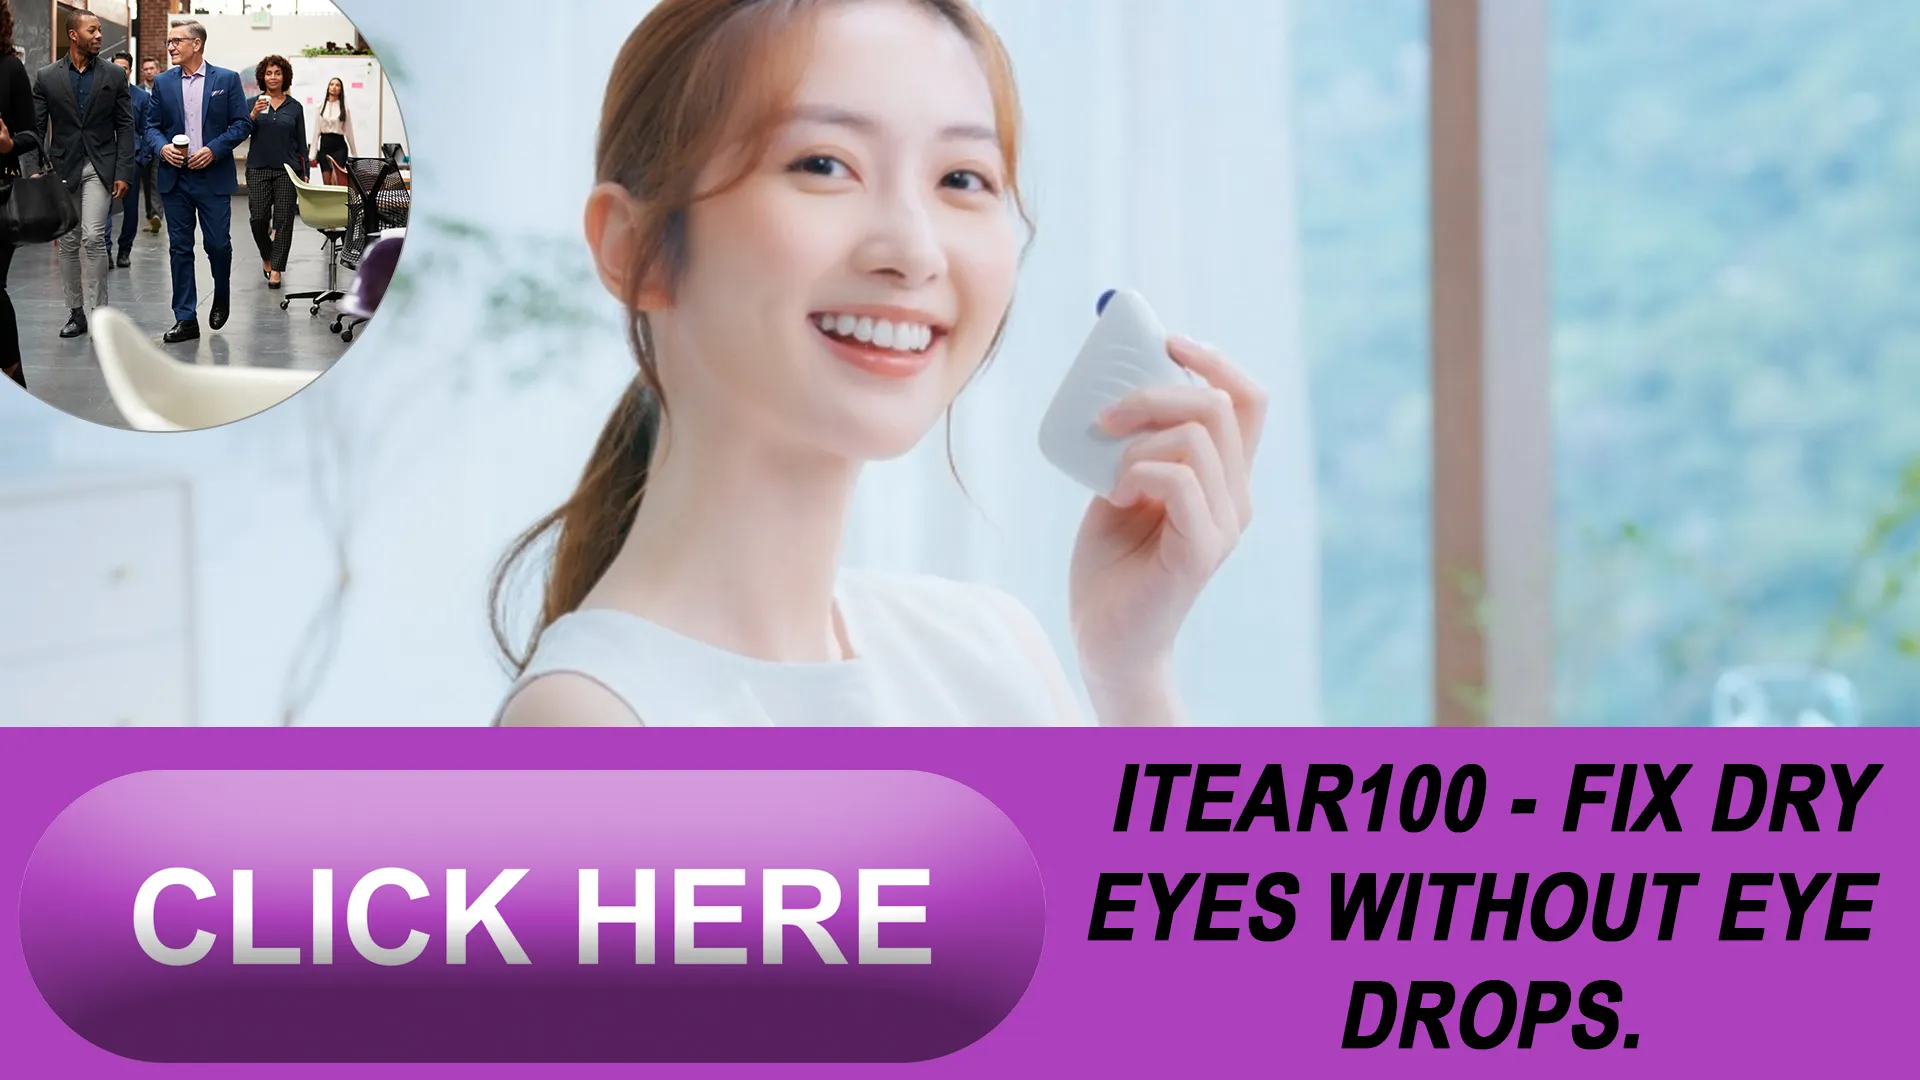 Experience the Revolutionary iTEAR100 Device